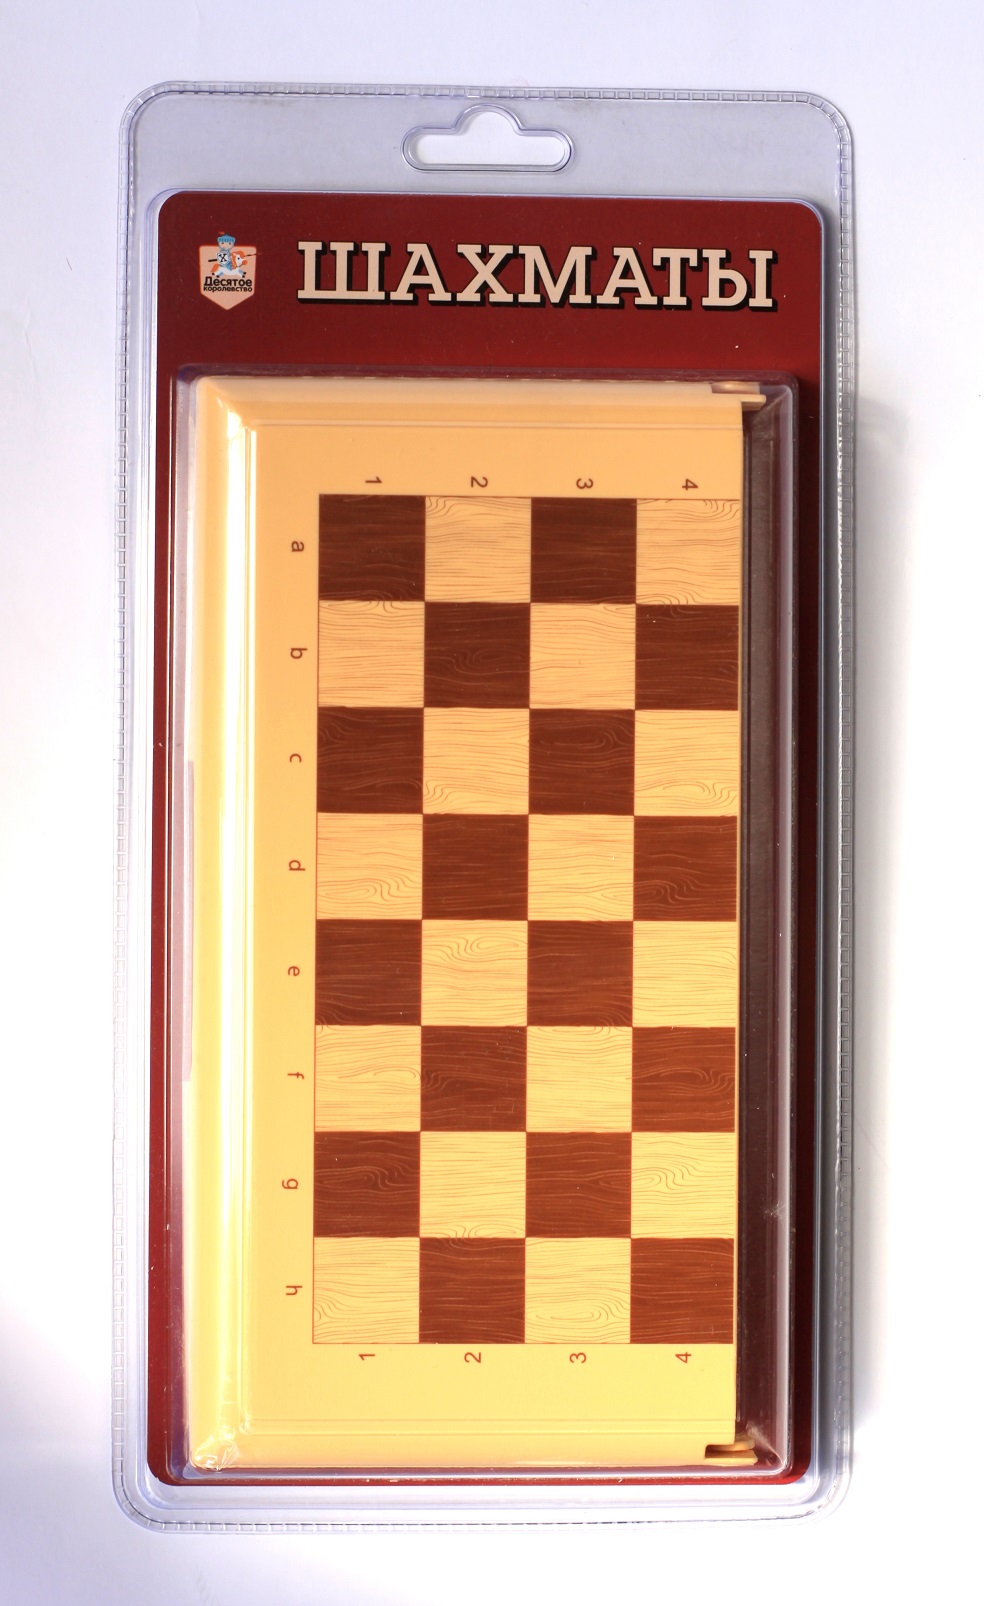 Игра настольная "Шахматы" (мал, беж) блистер